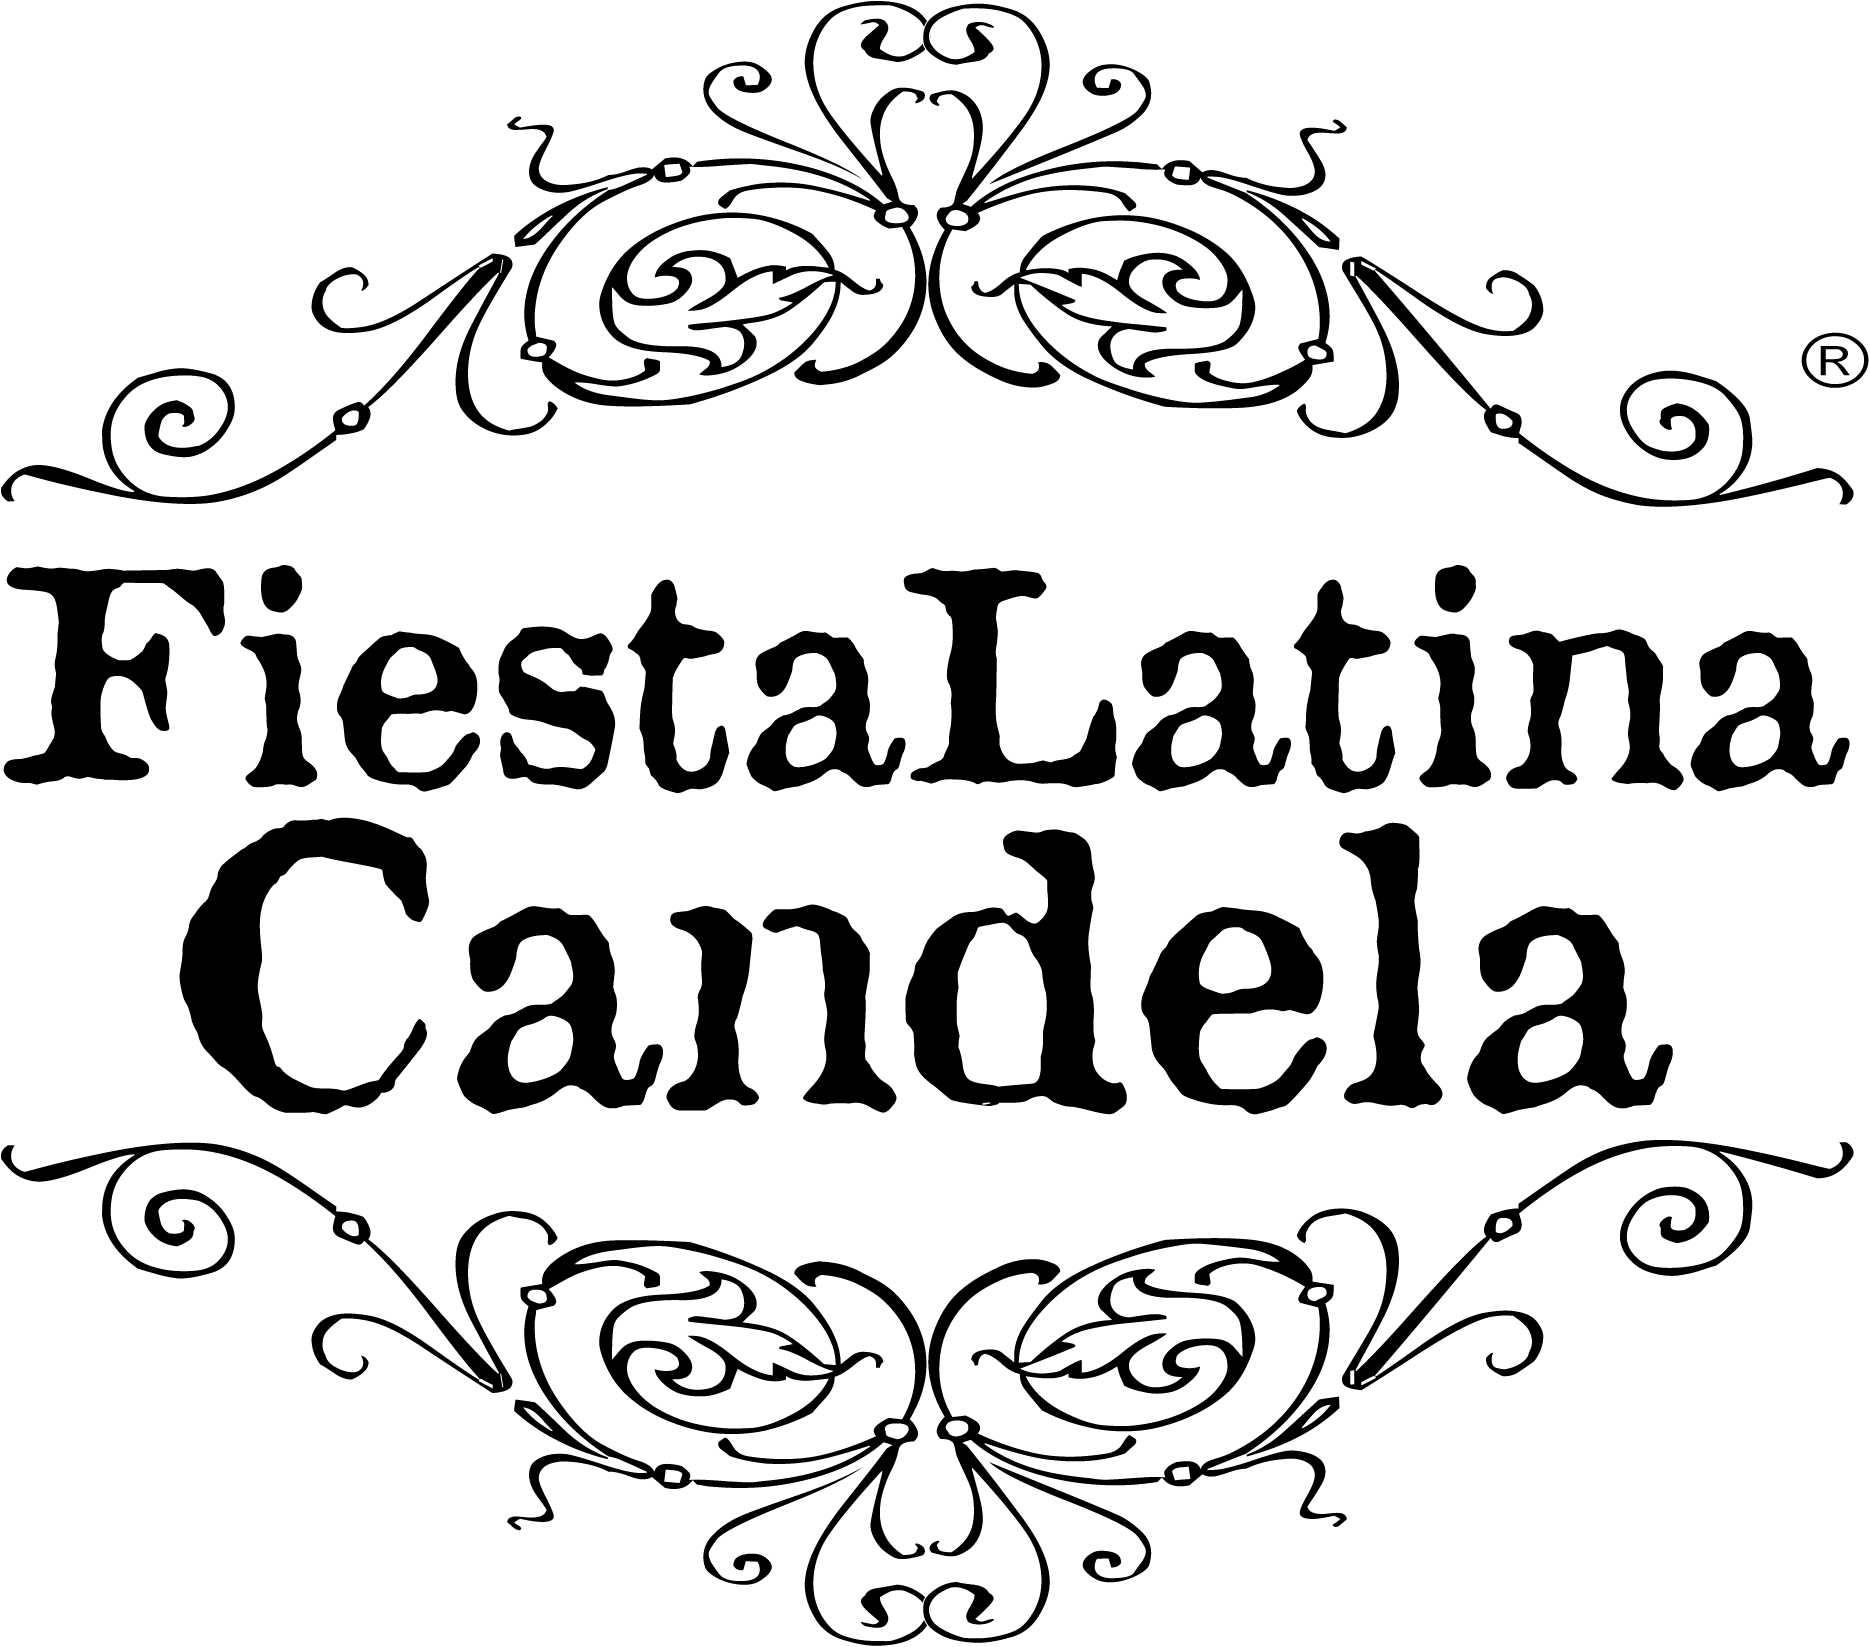 FiestaLatinaCandela